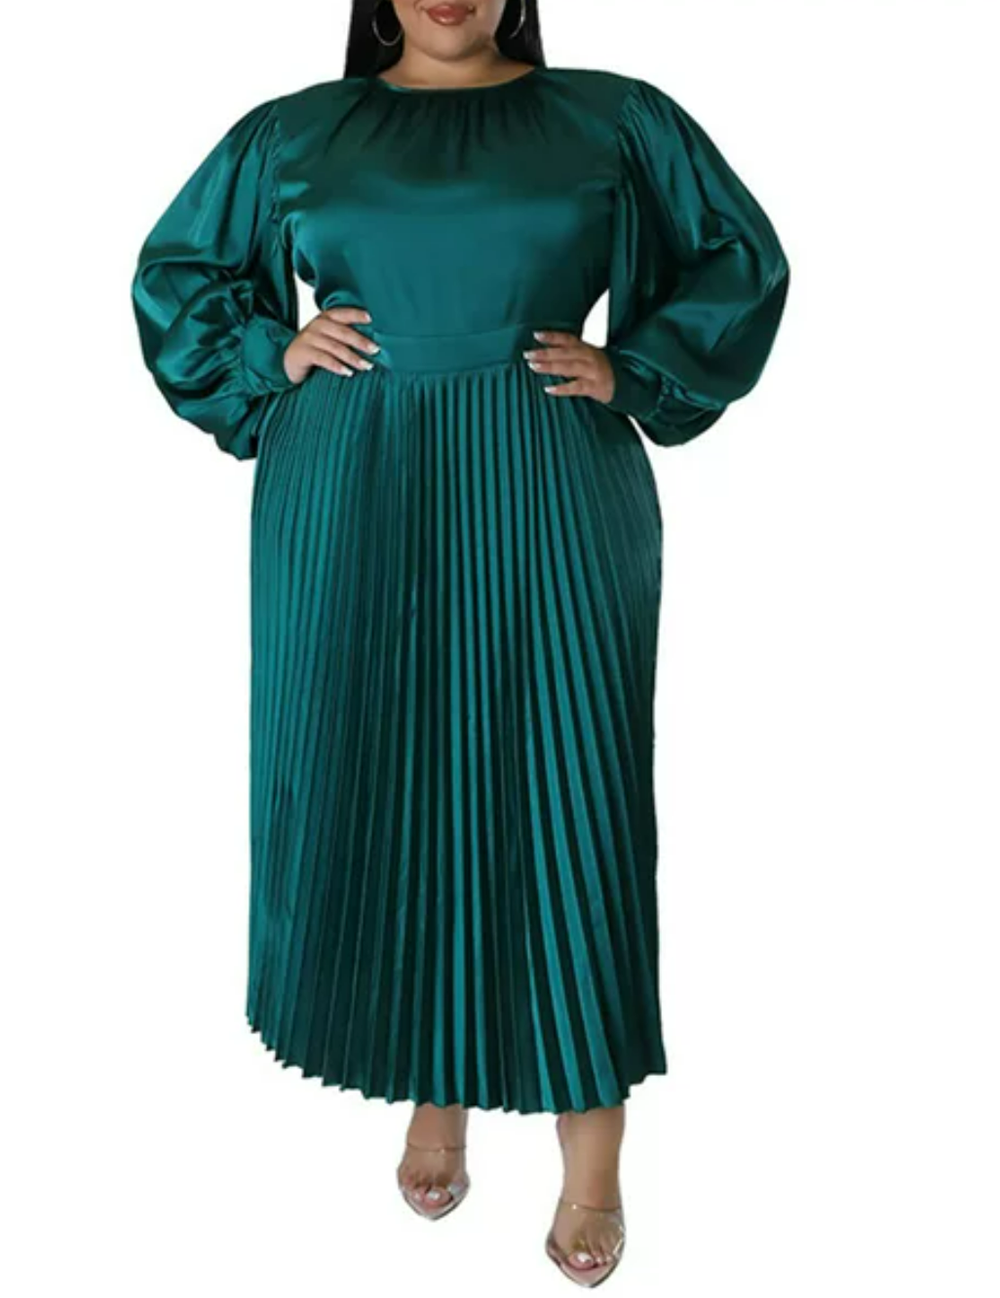 Capreze Women Dresses Solid Color Maxi Dress Plus Size Long Sleeve Crew Neck Dress Green XL.png